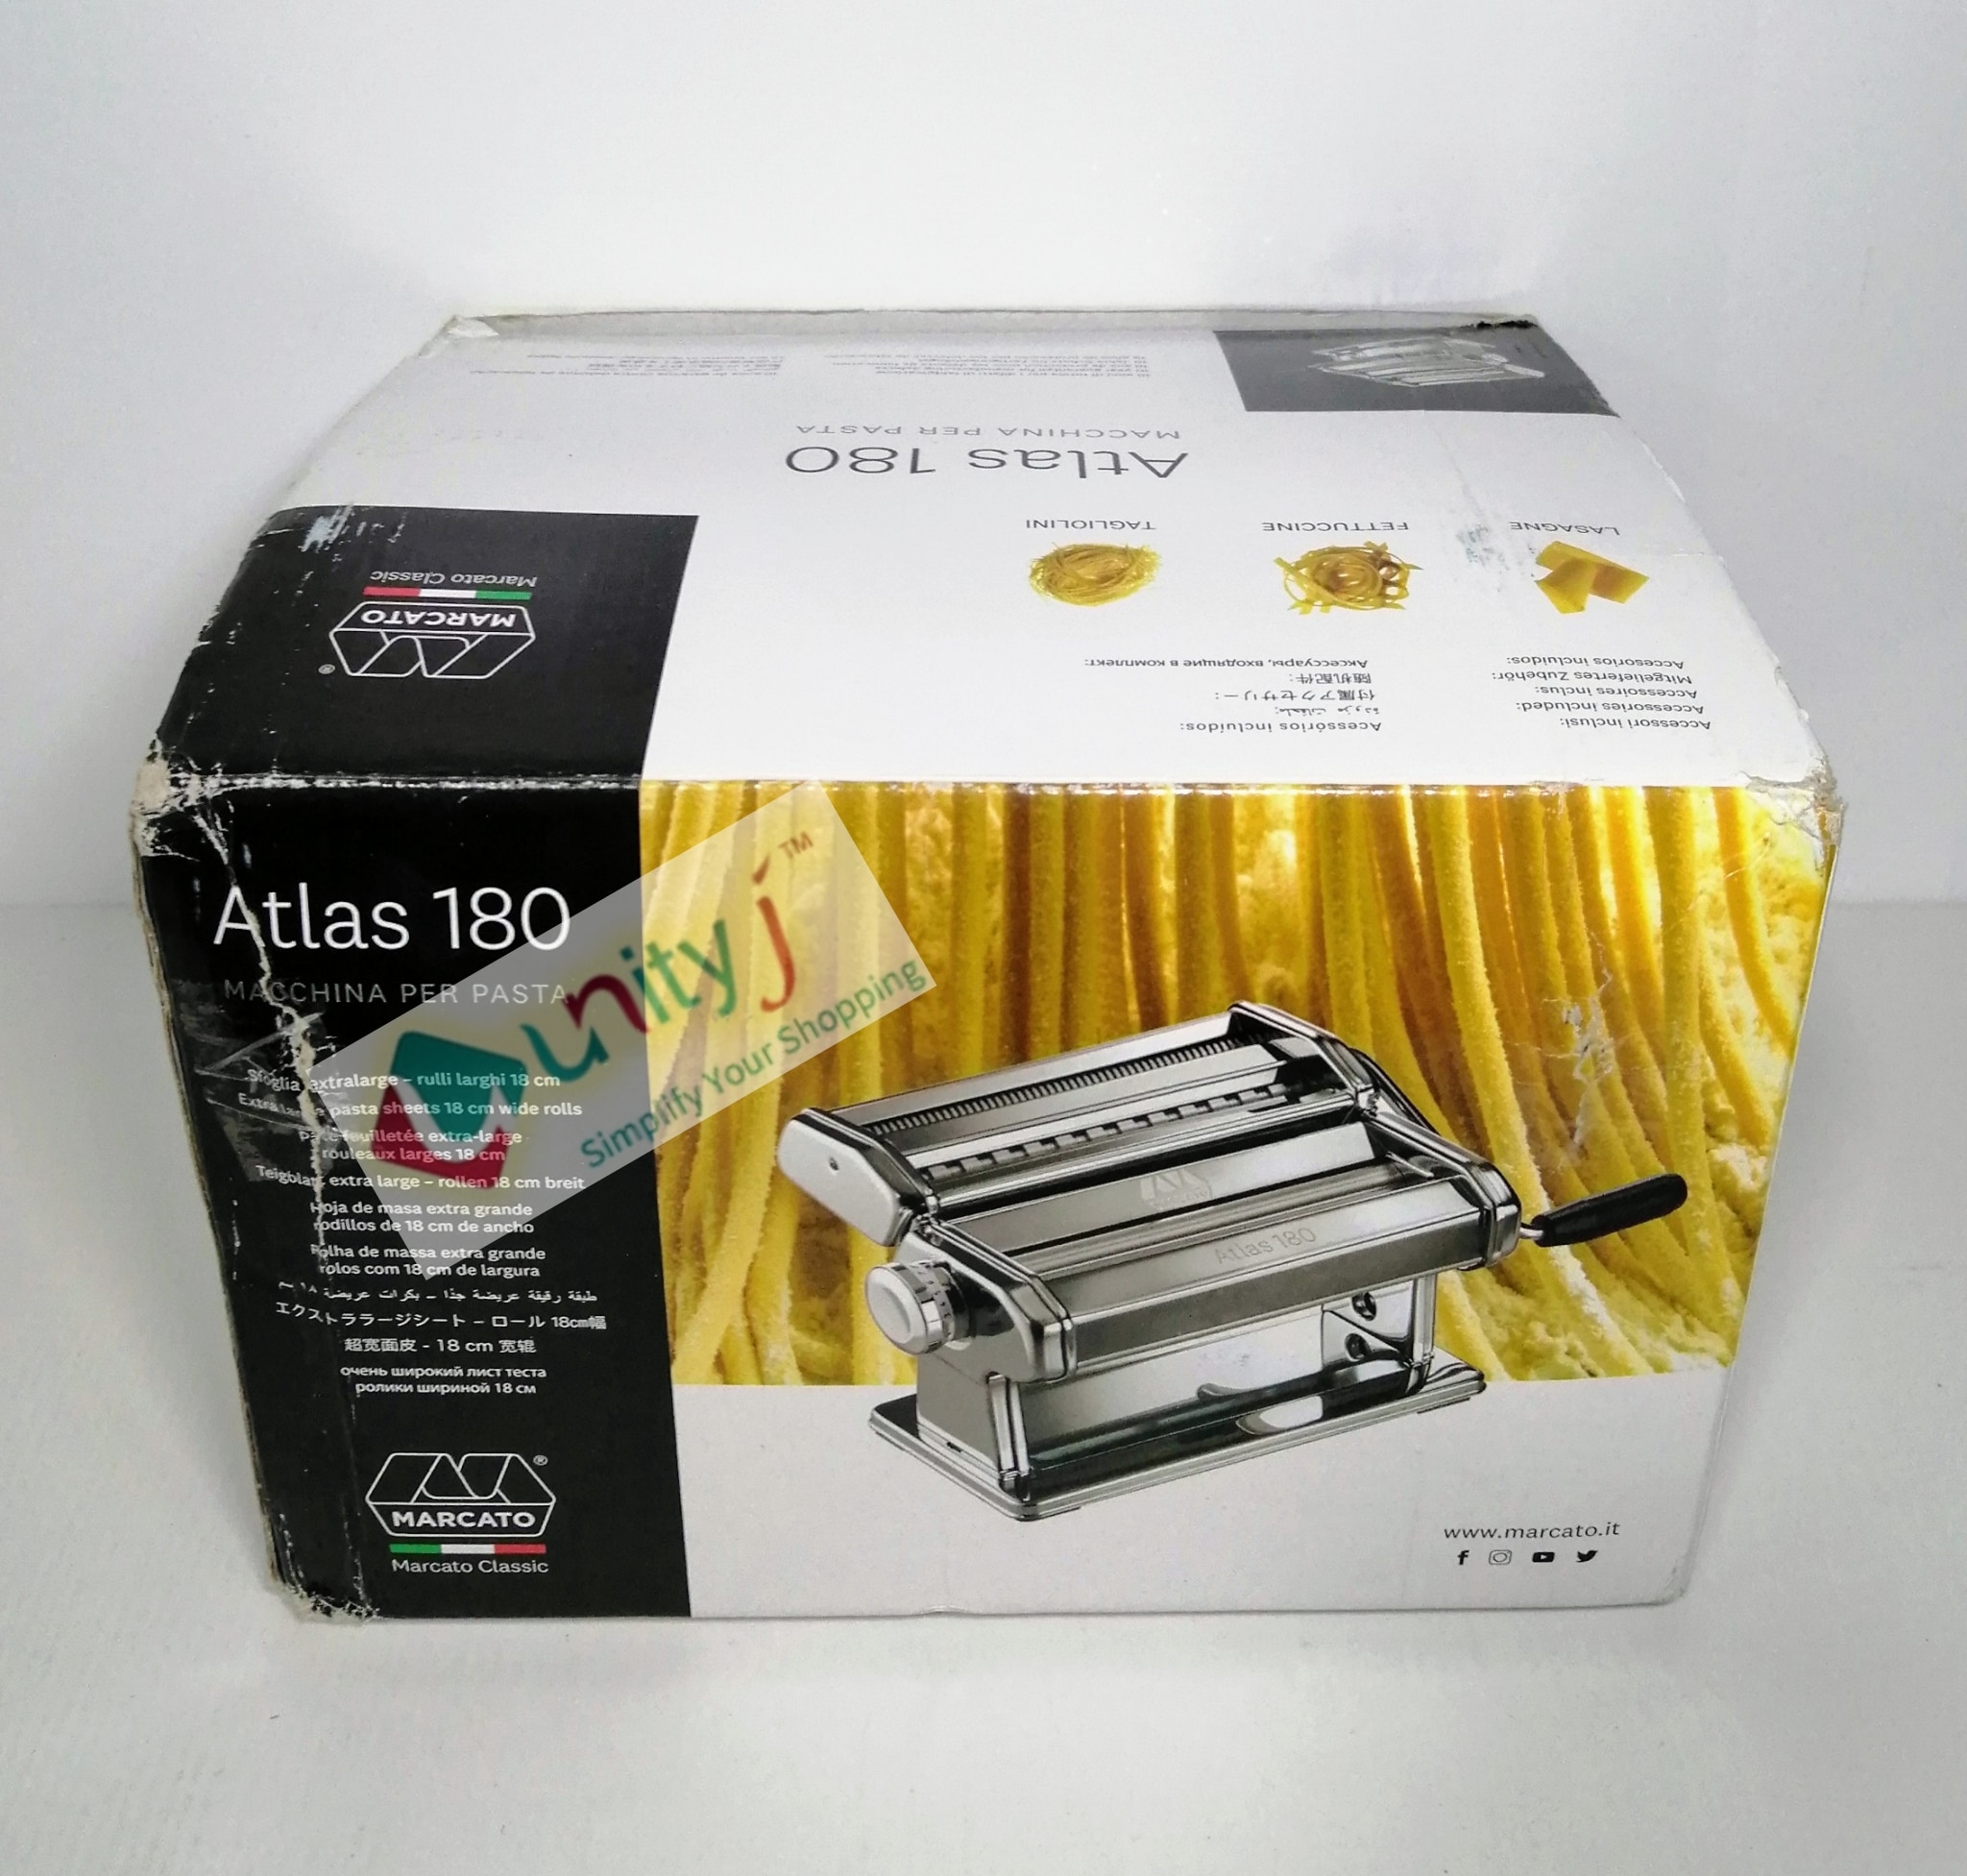 Marcato Atlas 180 Roller Pasta Machine - Interismo Online Shop Global